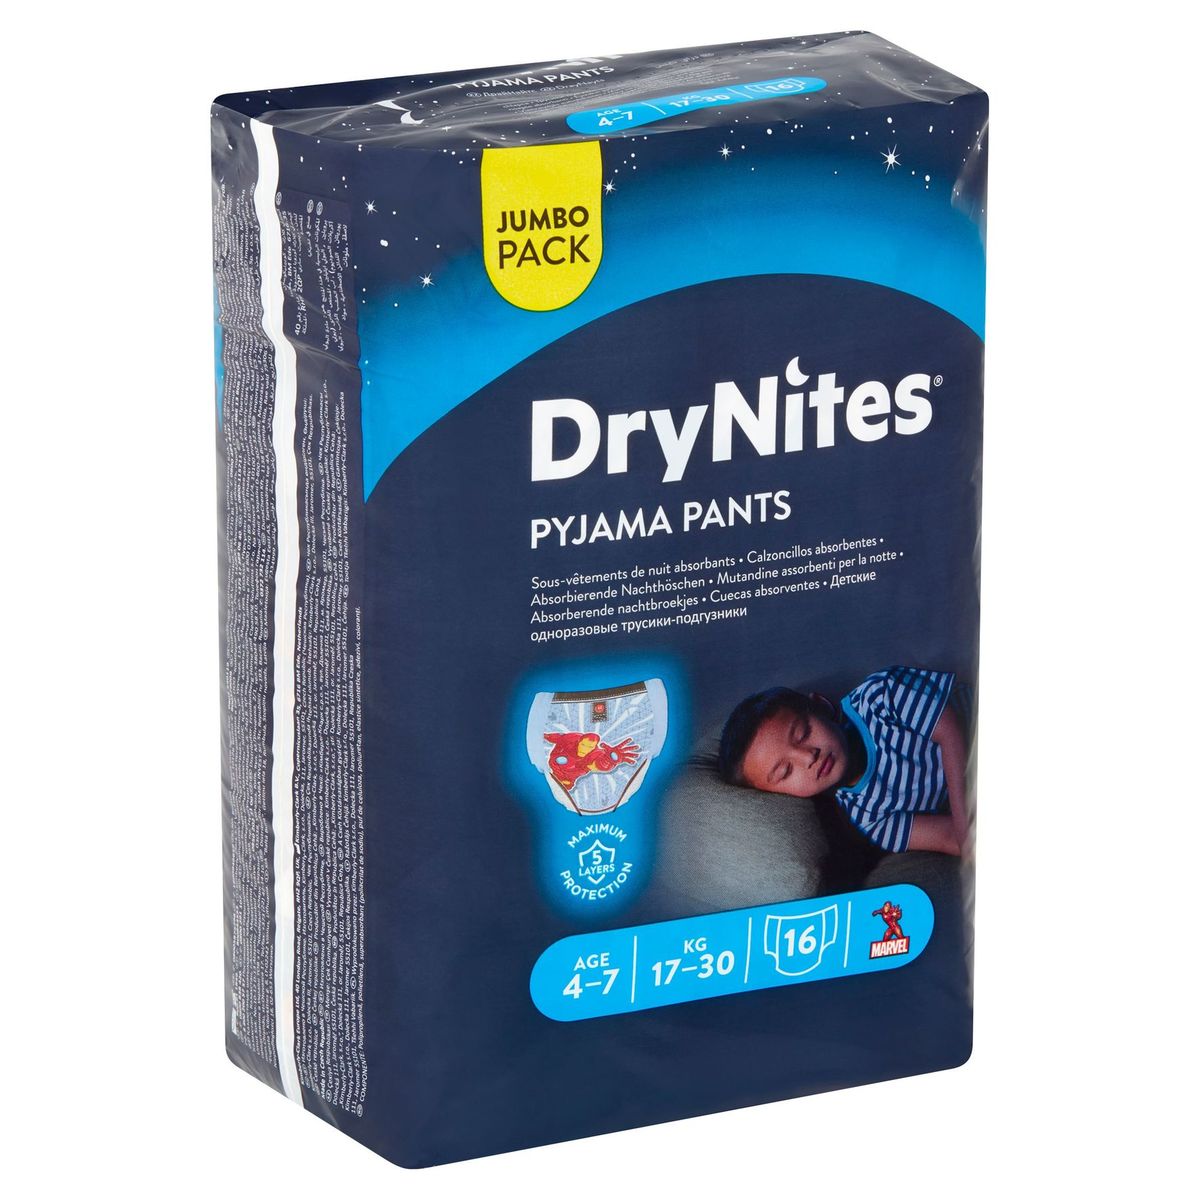 DryNites Pyjama Pants Boy 4-7 Ans 17-30 kg 16 Pièces